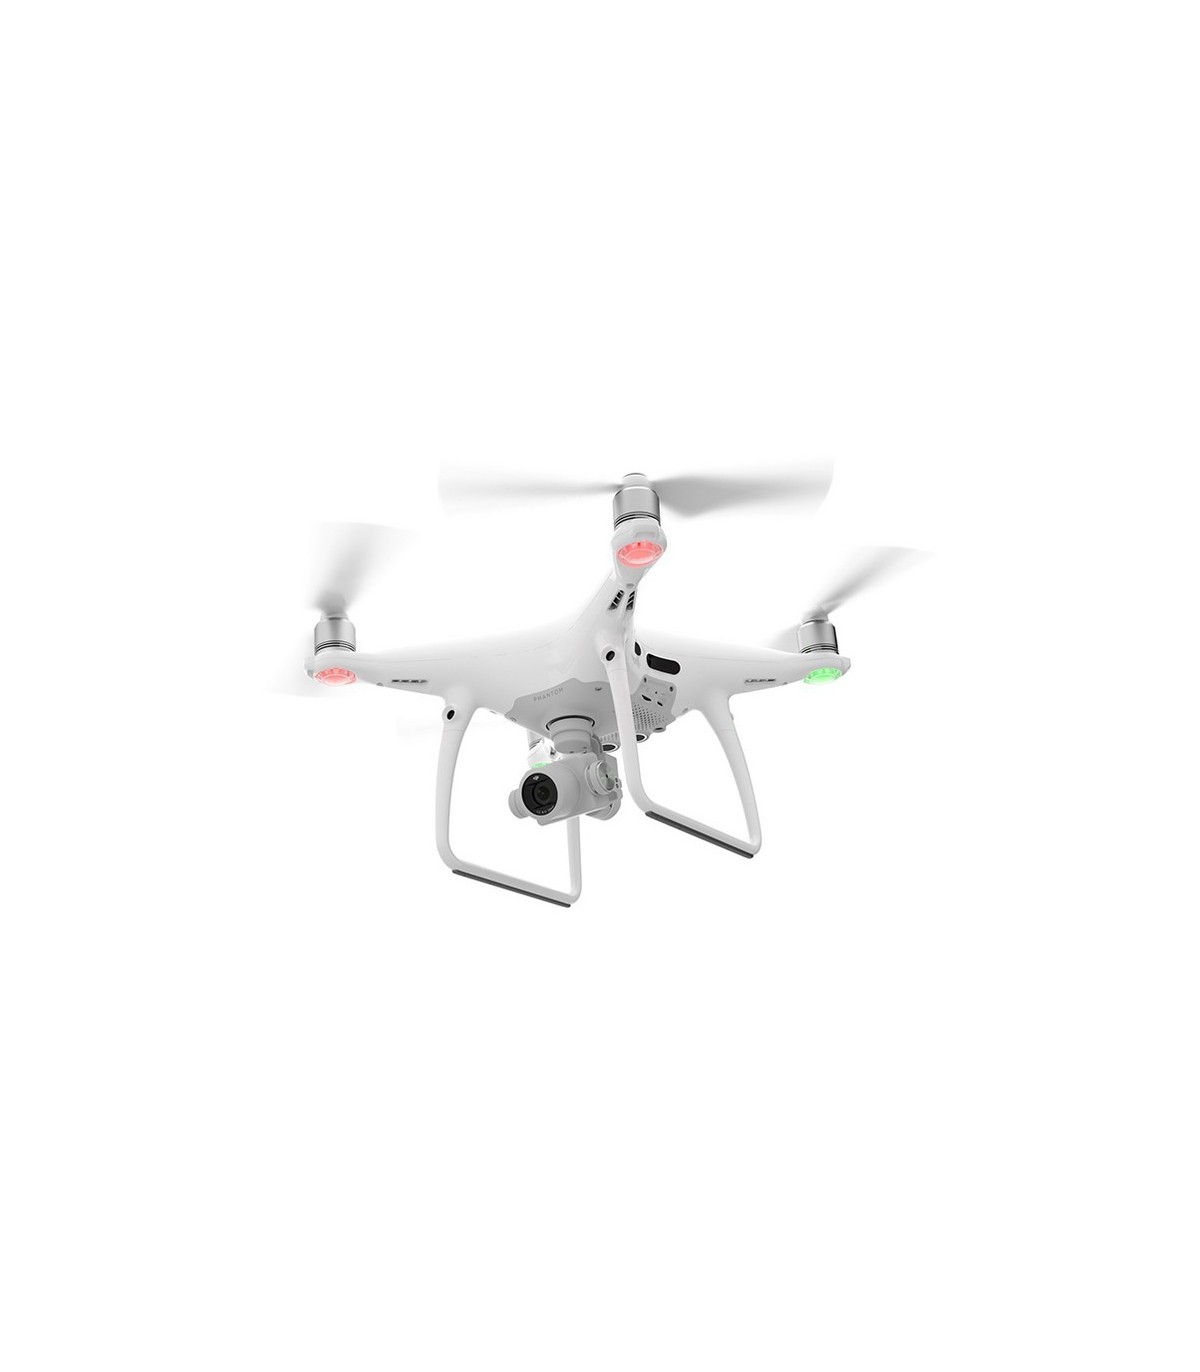 Arriendo Drone Profesional DJI modelo Mavic Air 2